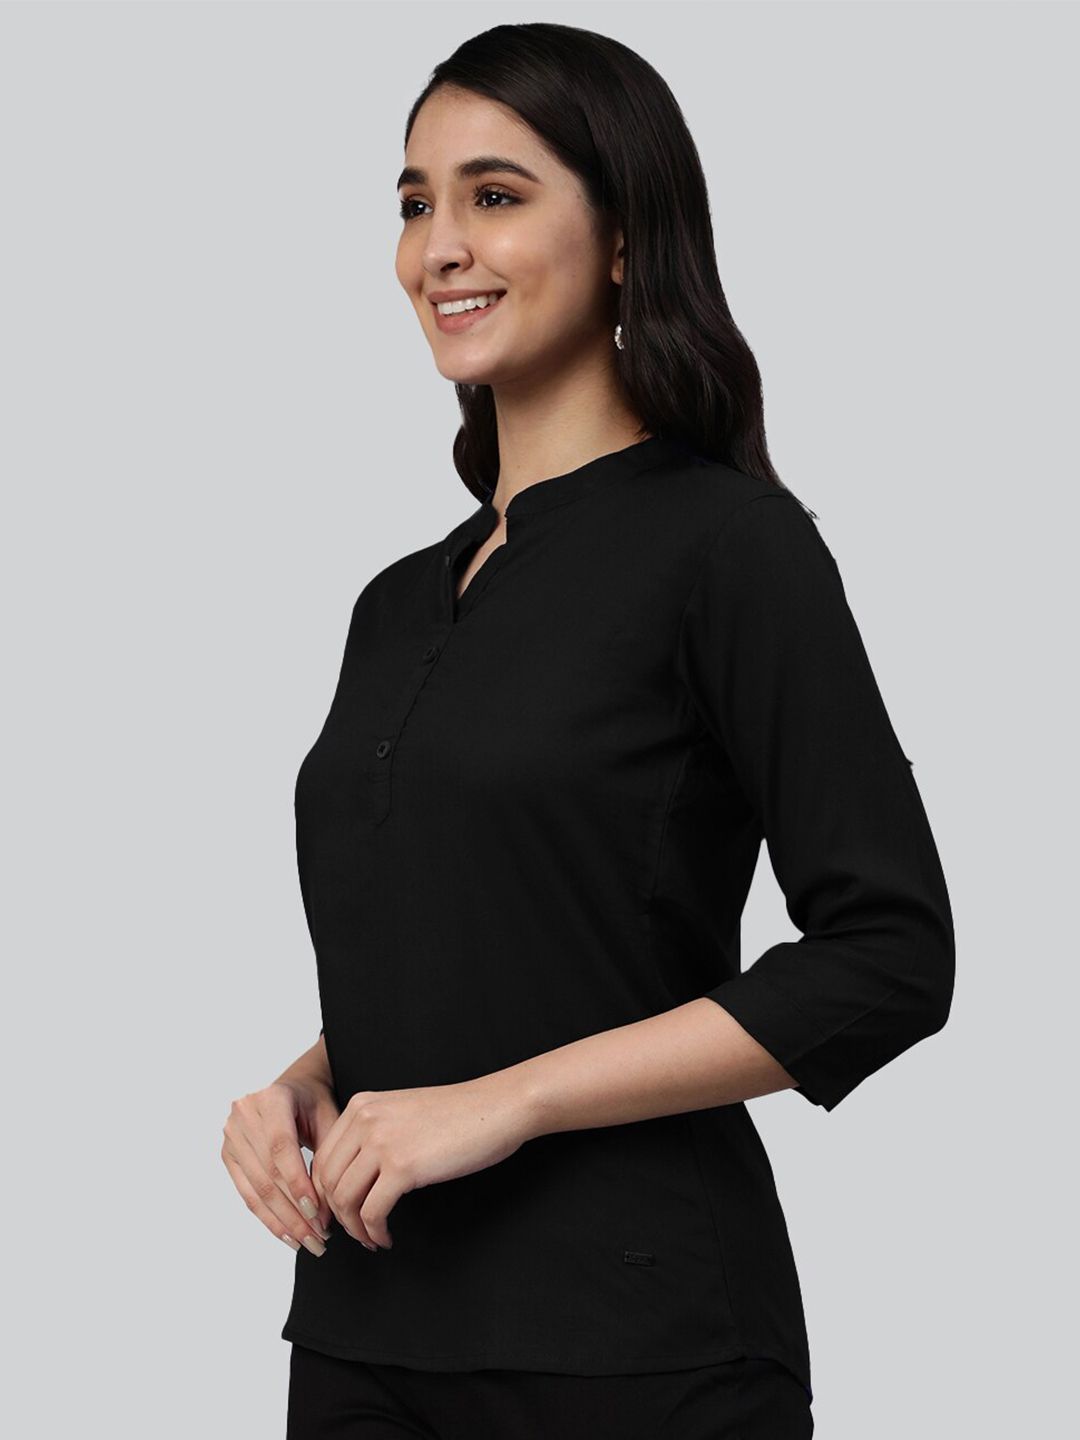 LYRA Black Mandarin Collar Three Quarter Sleeves Top Price in India